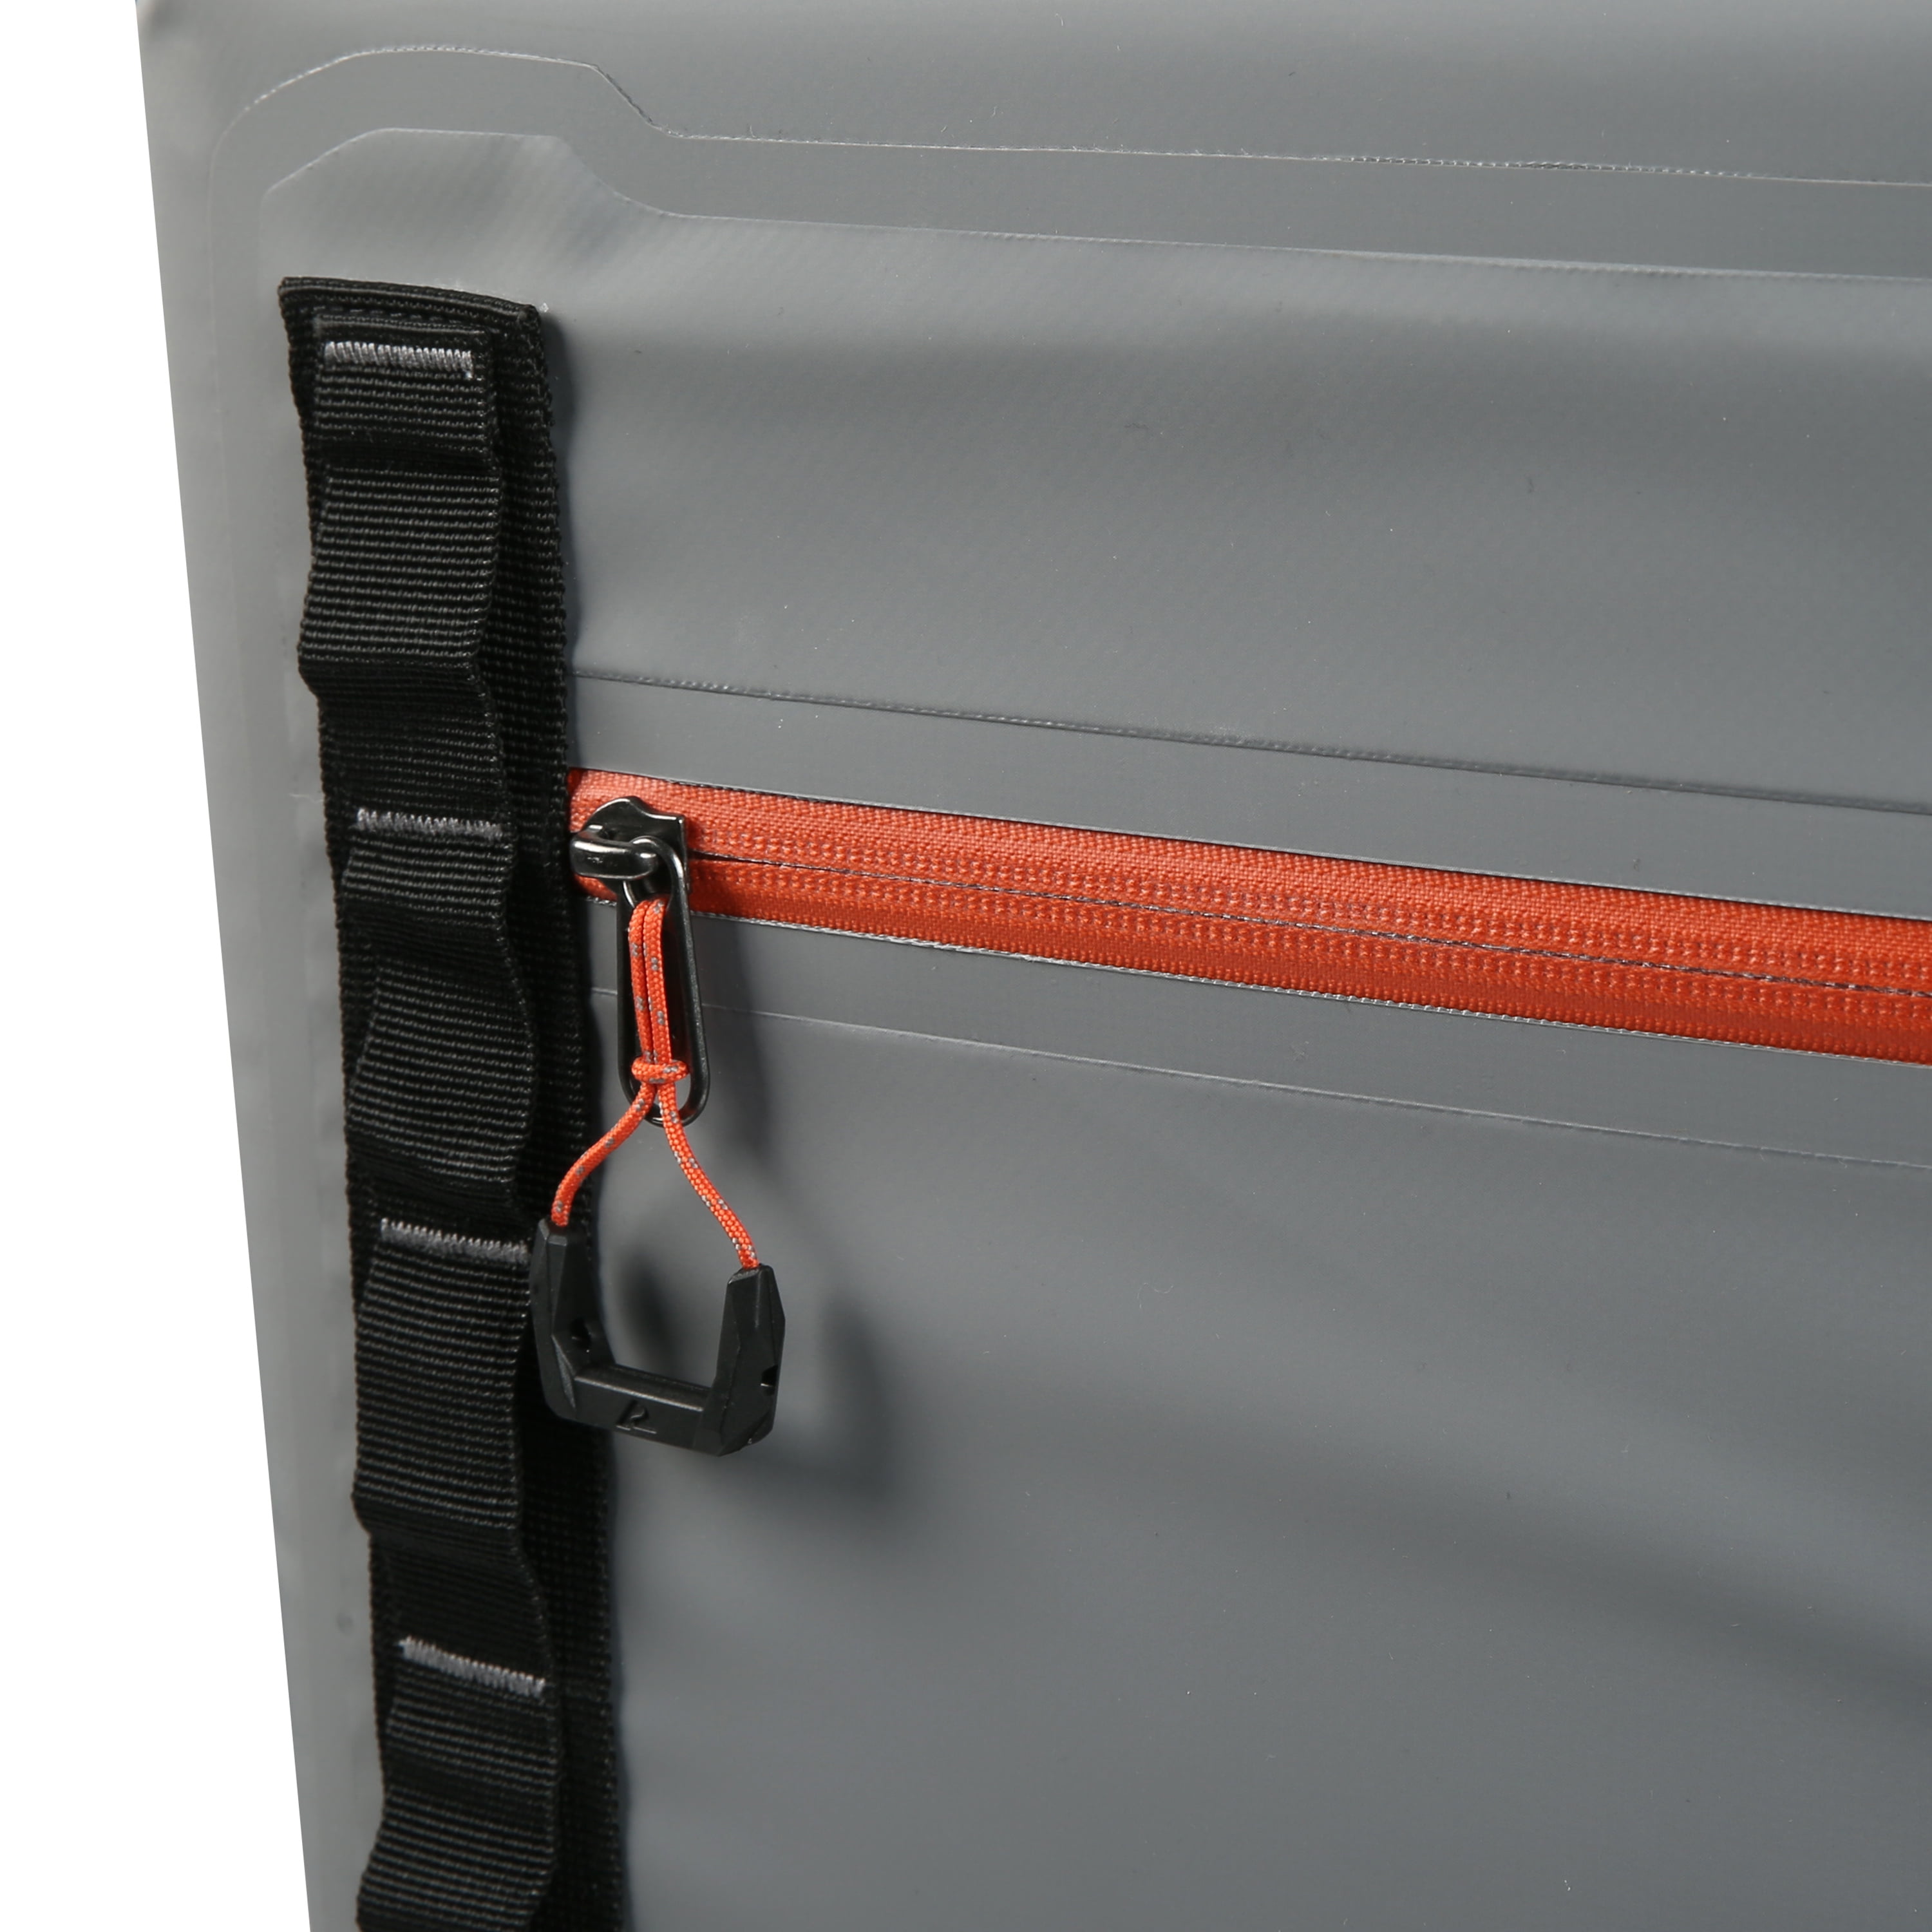 OT QOMOTOP Cooler Backpack, 24 Cans Soft Cooler, Waterproof and